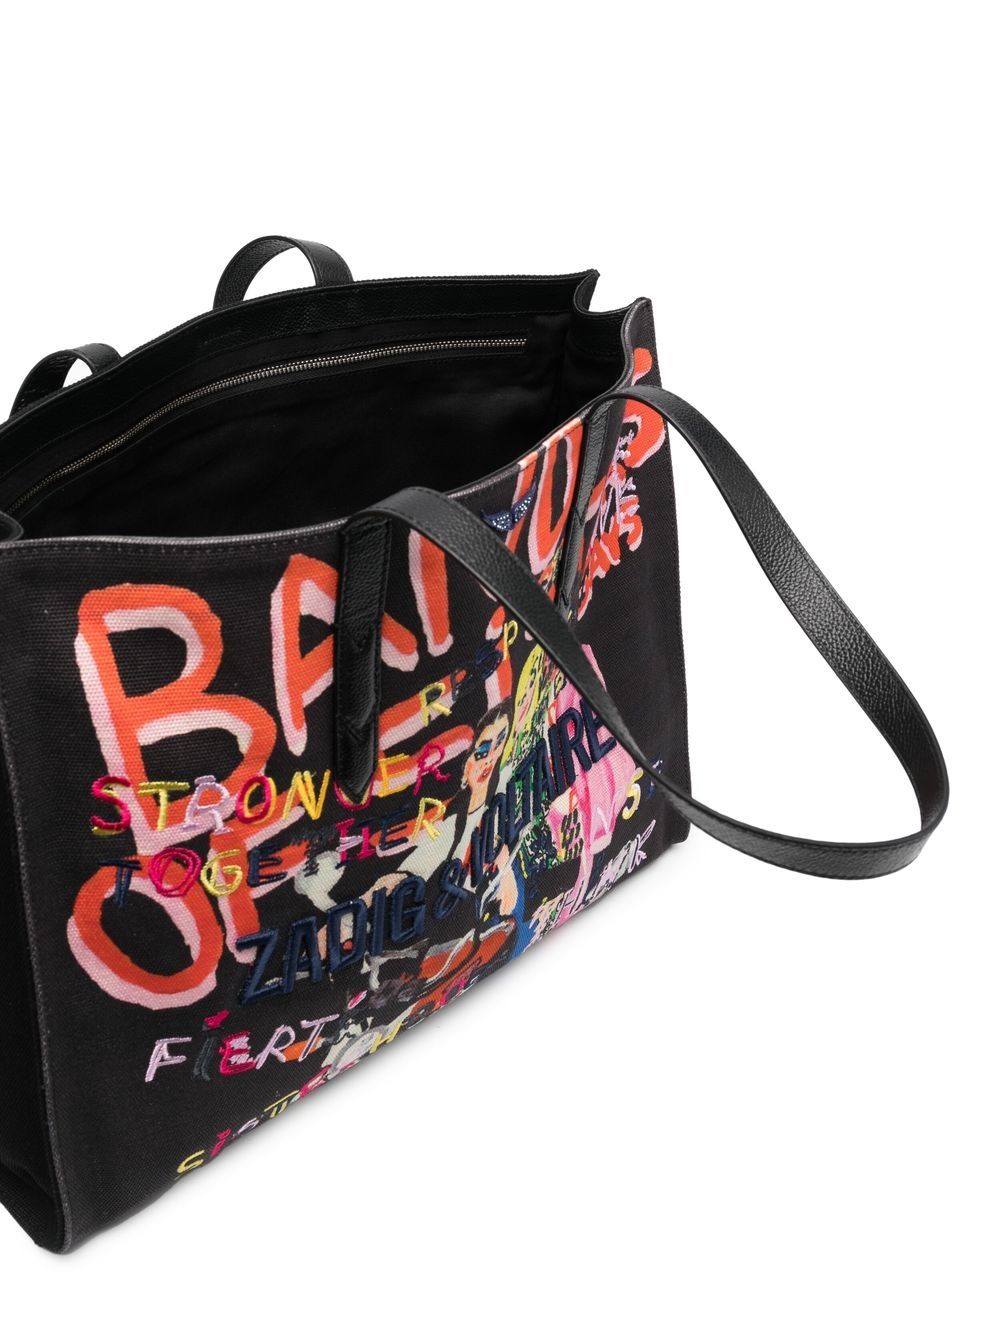 Zadig & Voltaire Tote Bag for Sale by preppy-designzz